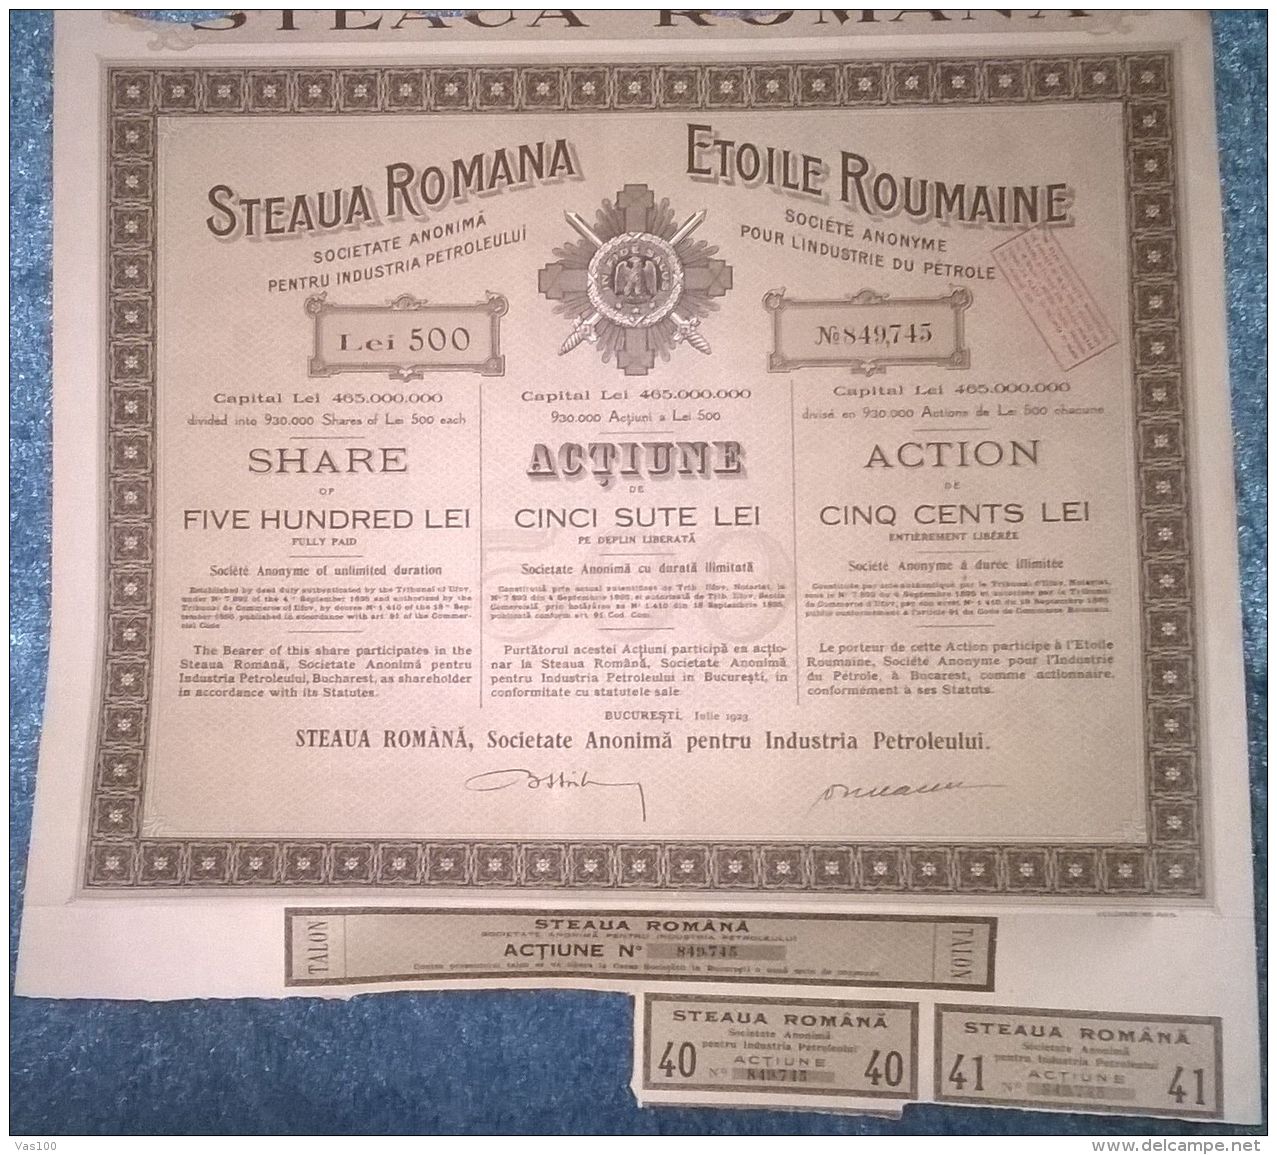 STEAUA ROMANA OIL COMPANY, SHARES, STOCK, REVENUE COUPONS, 1923, ROMANIA - Pétrole